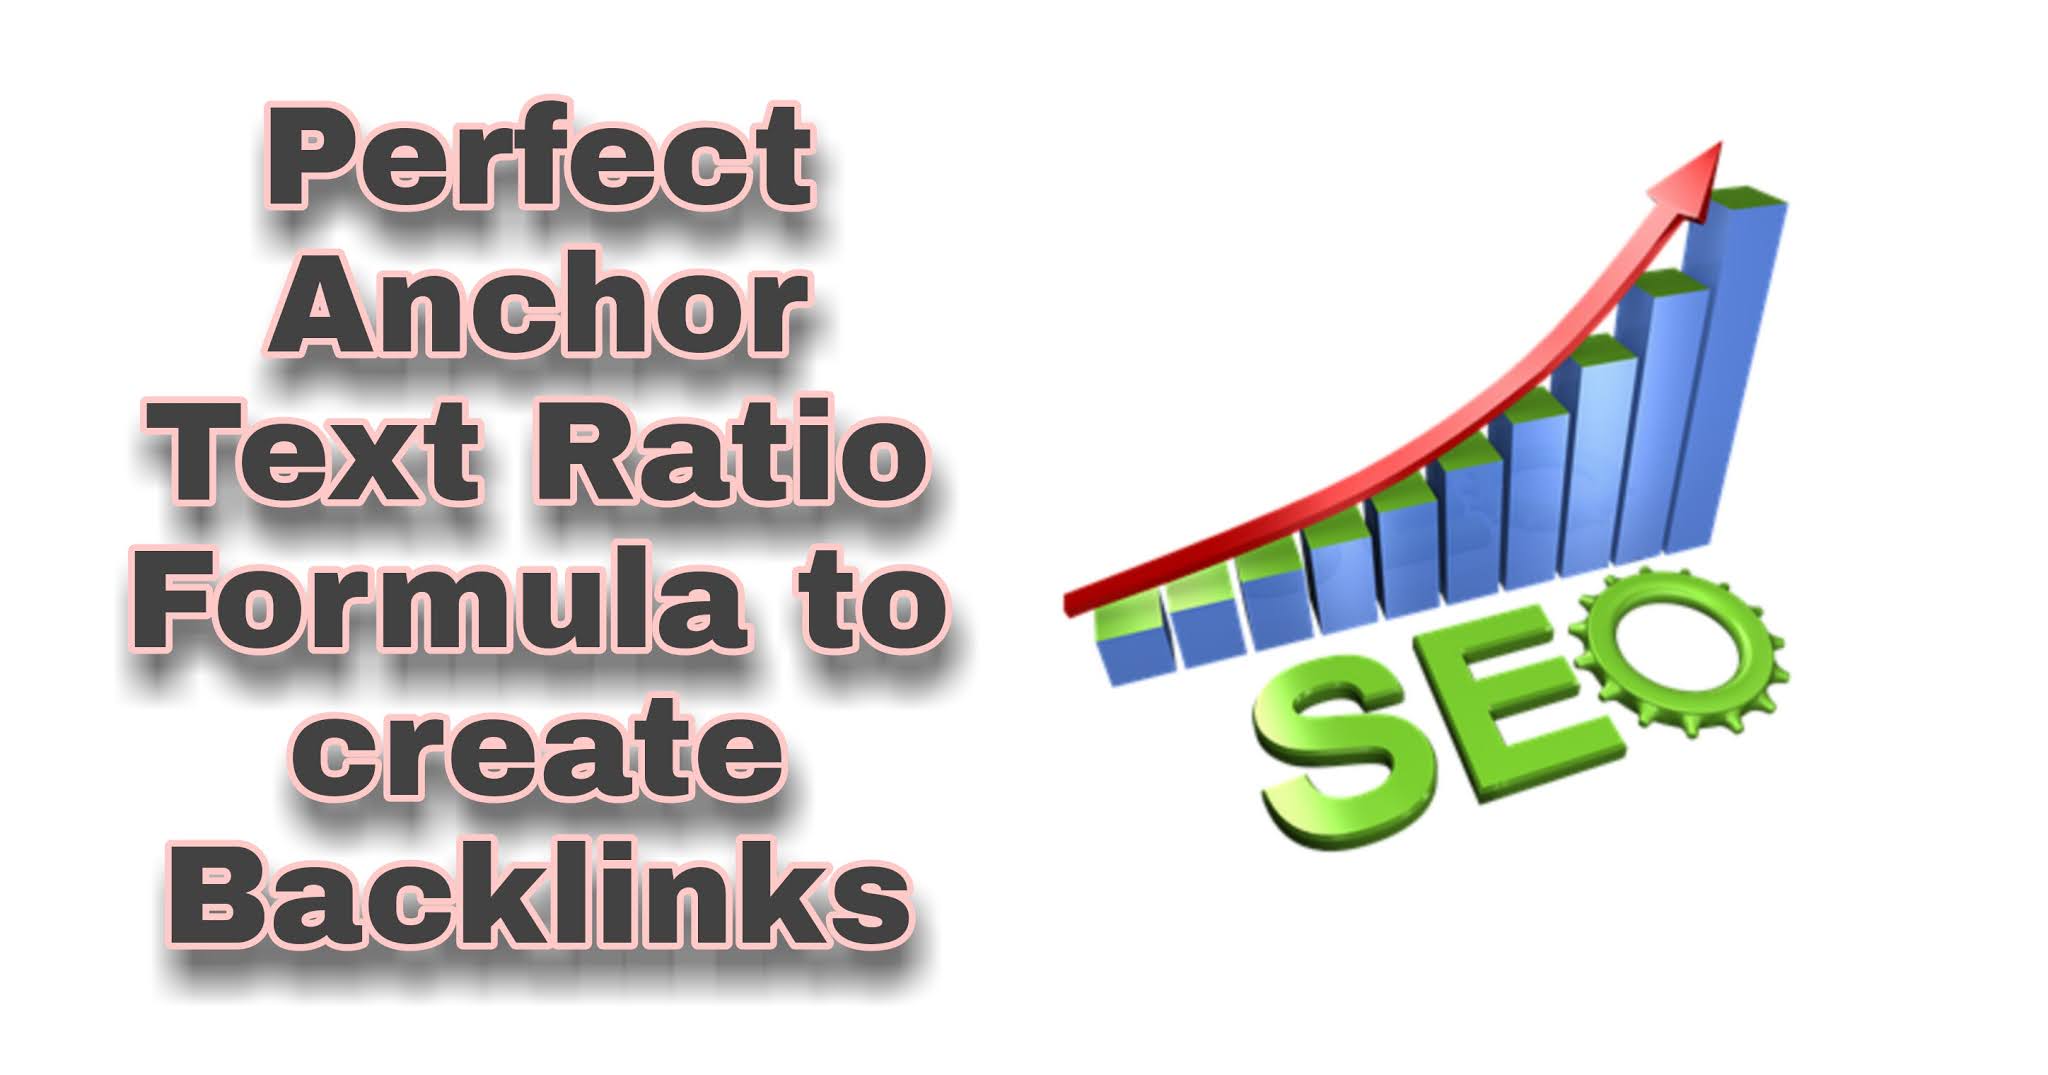 Perfect anchor Text Ratio Formula to create Backlinks